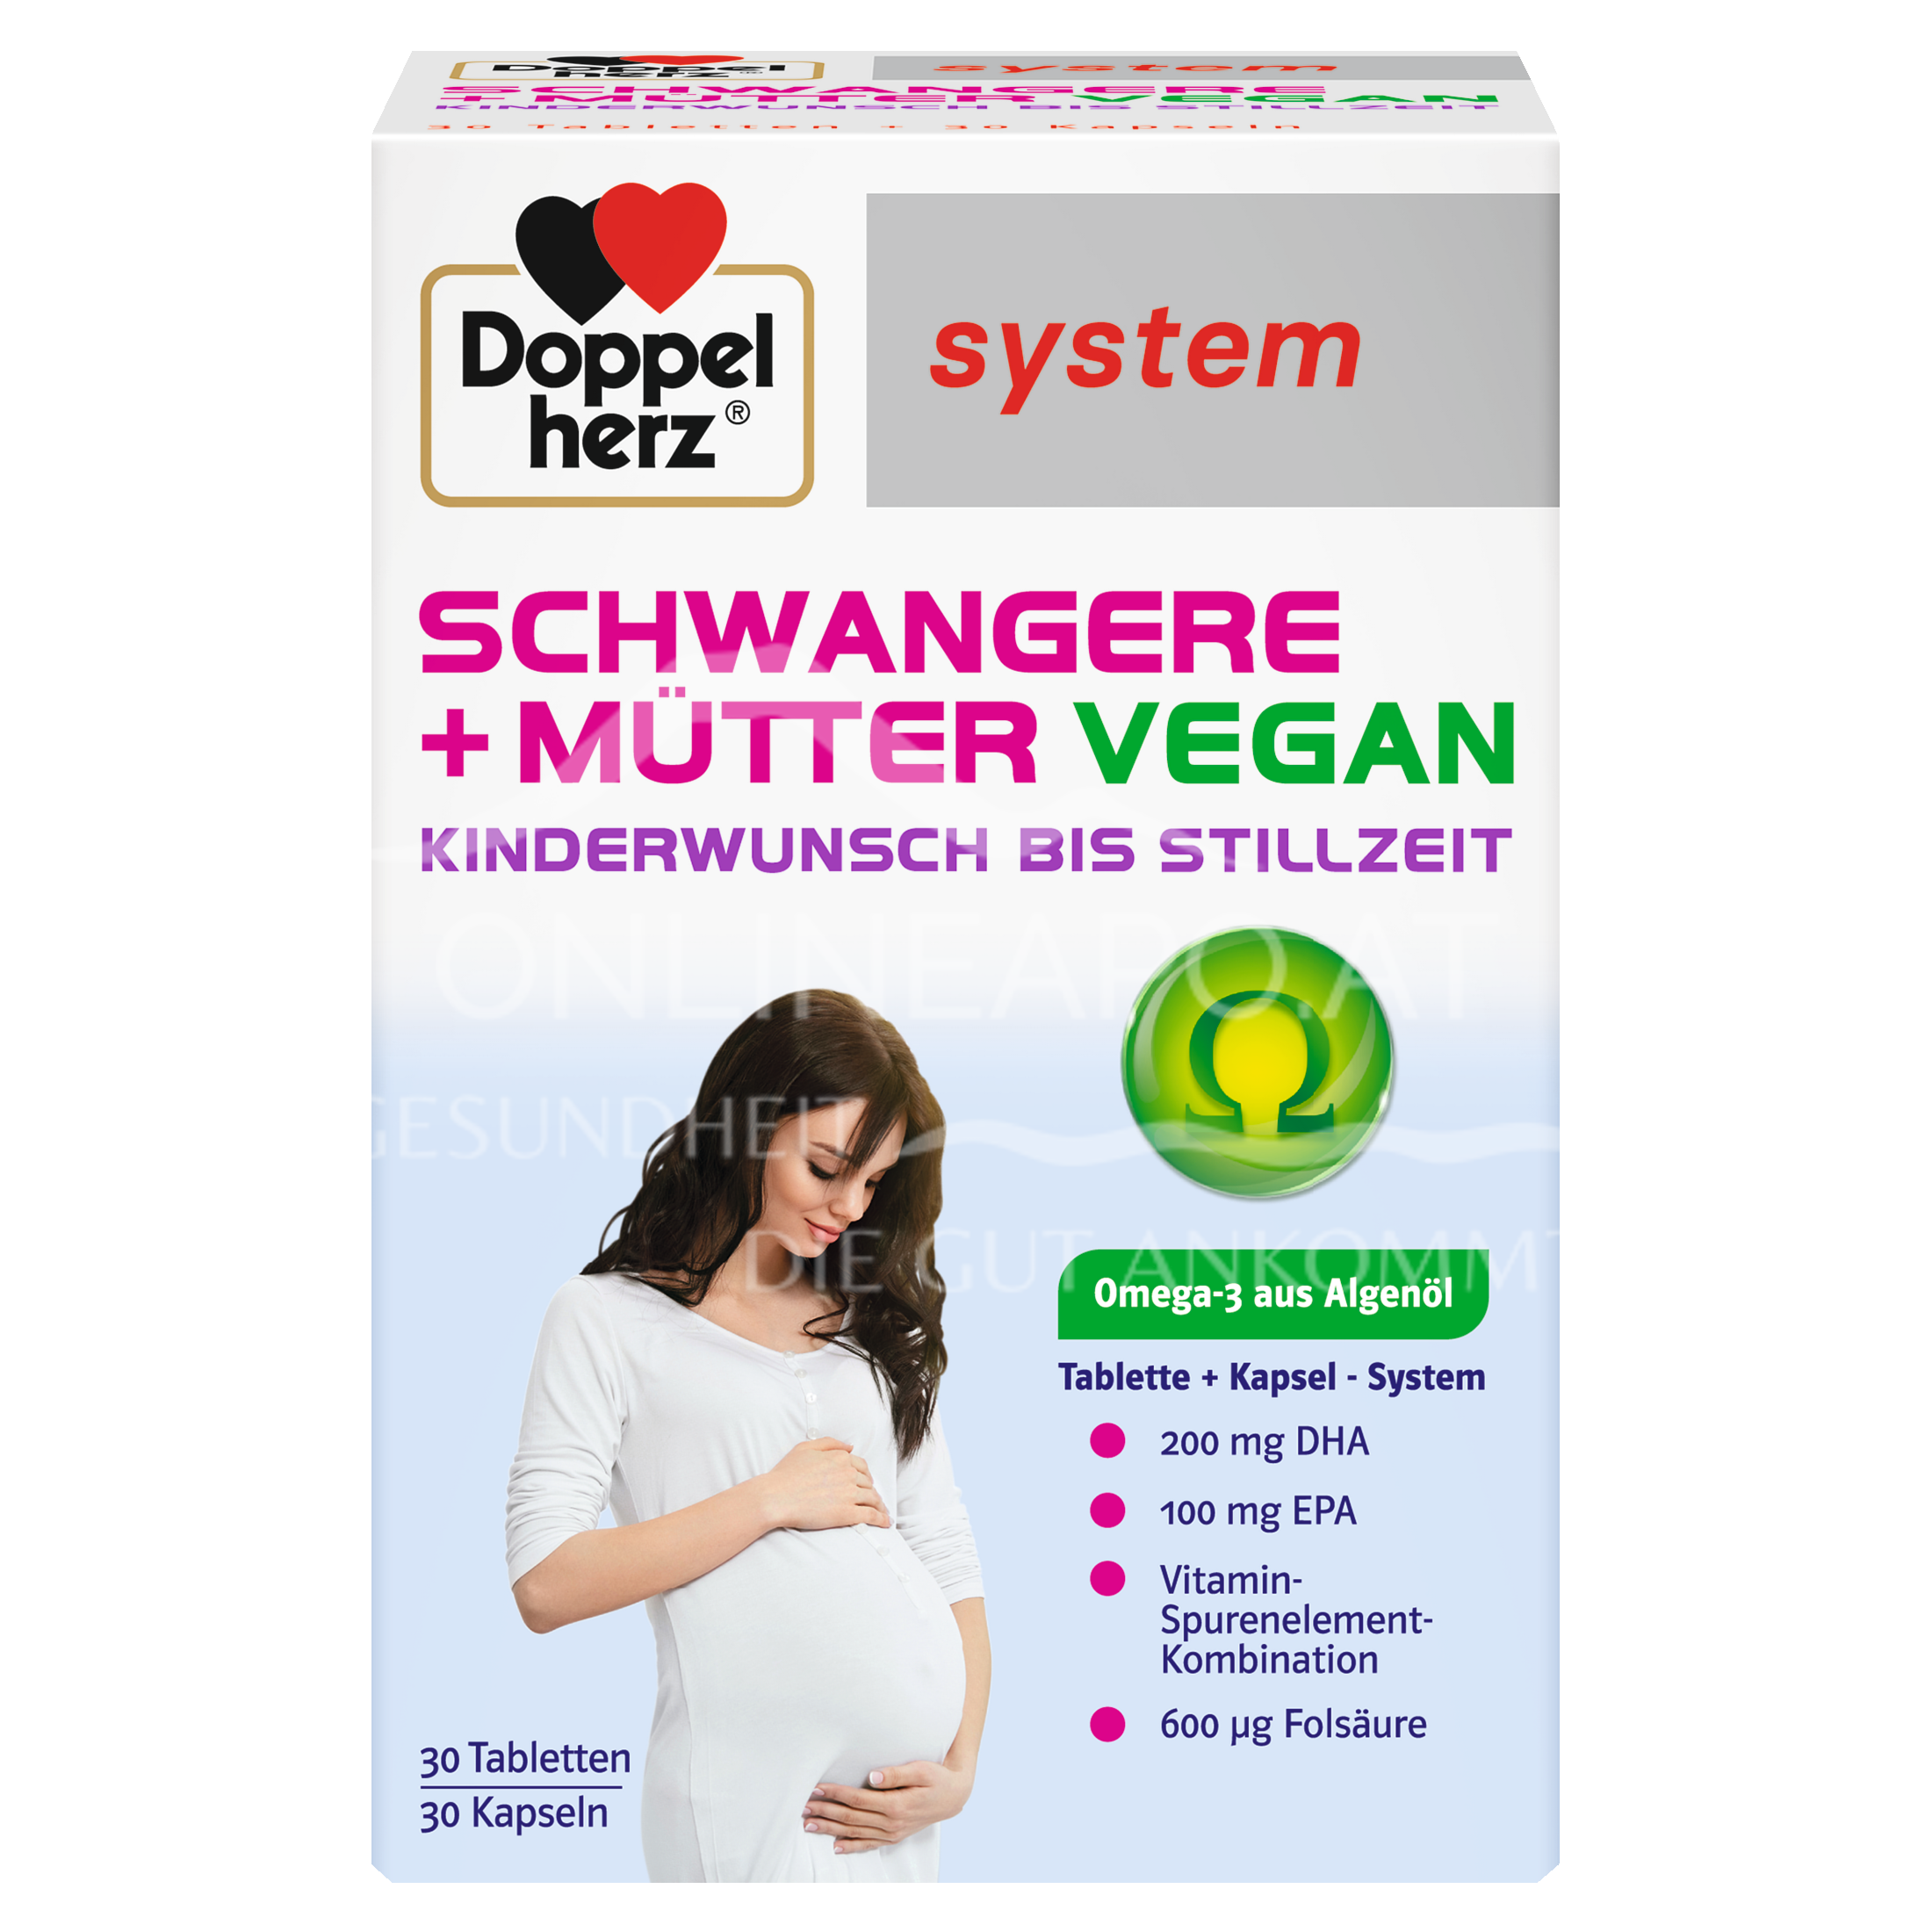 Doppelherz system Schwangere + Mütter vegan 30 Tabletten + 30 Kapseln